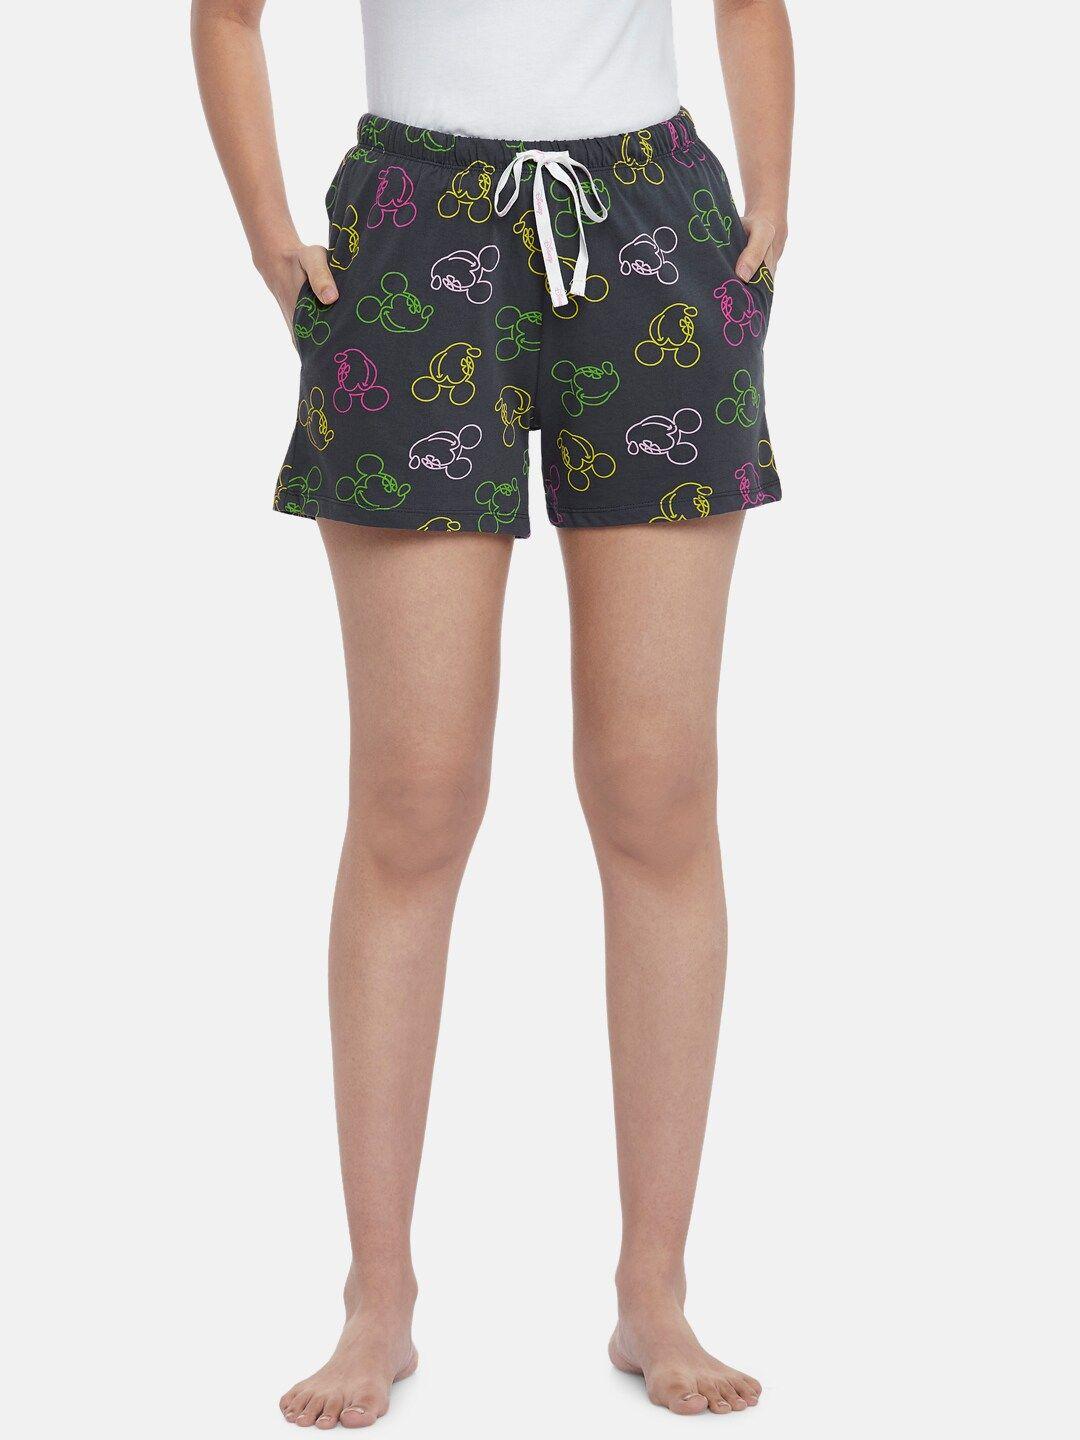 dreamz-by-pantaloons-women-printed-lounge-shorts